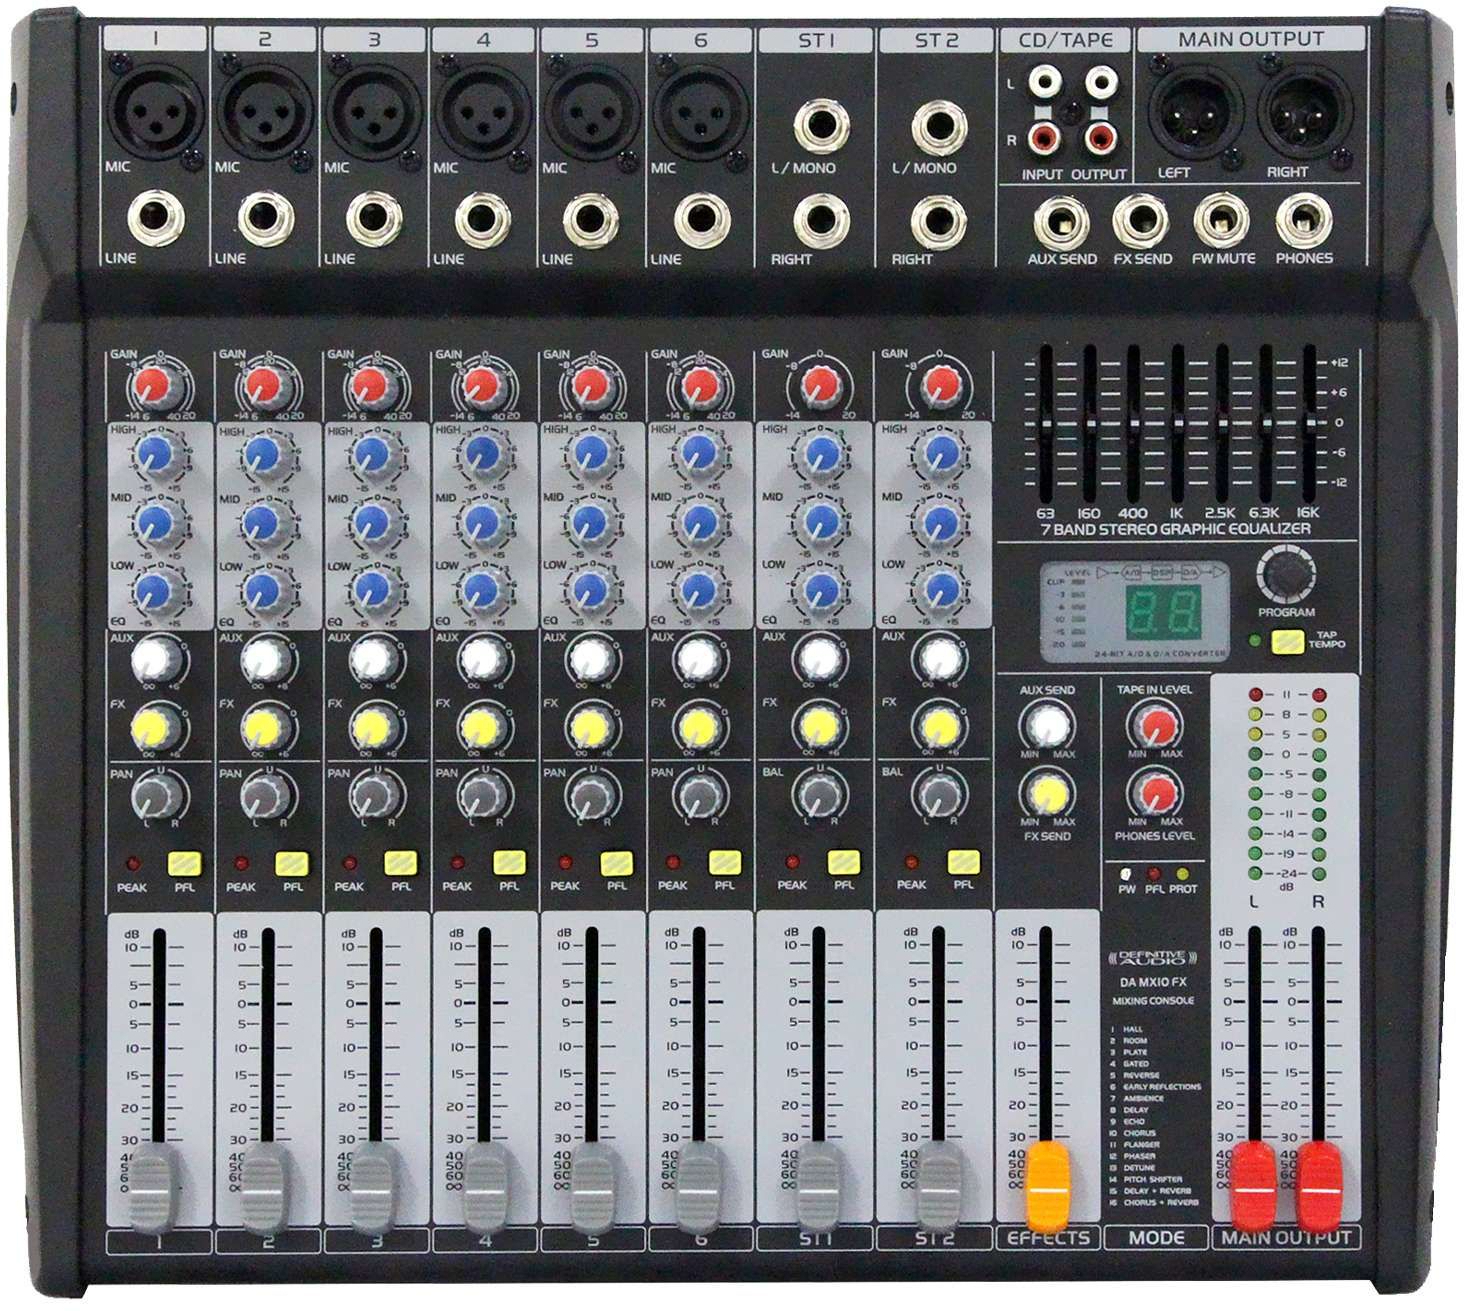 Definitive Audio Da Mx10 Fx2 - Analog mixing desk - Main picture